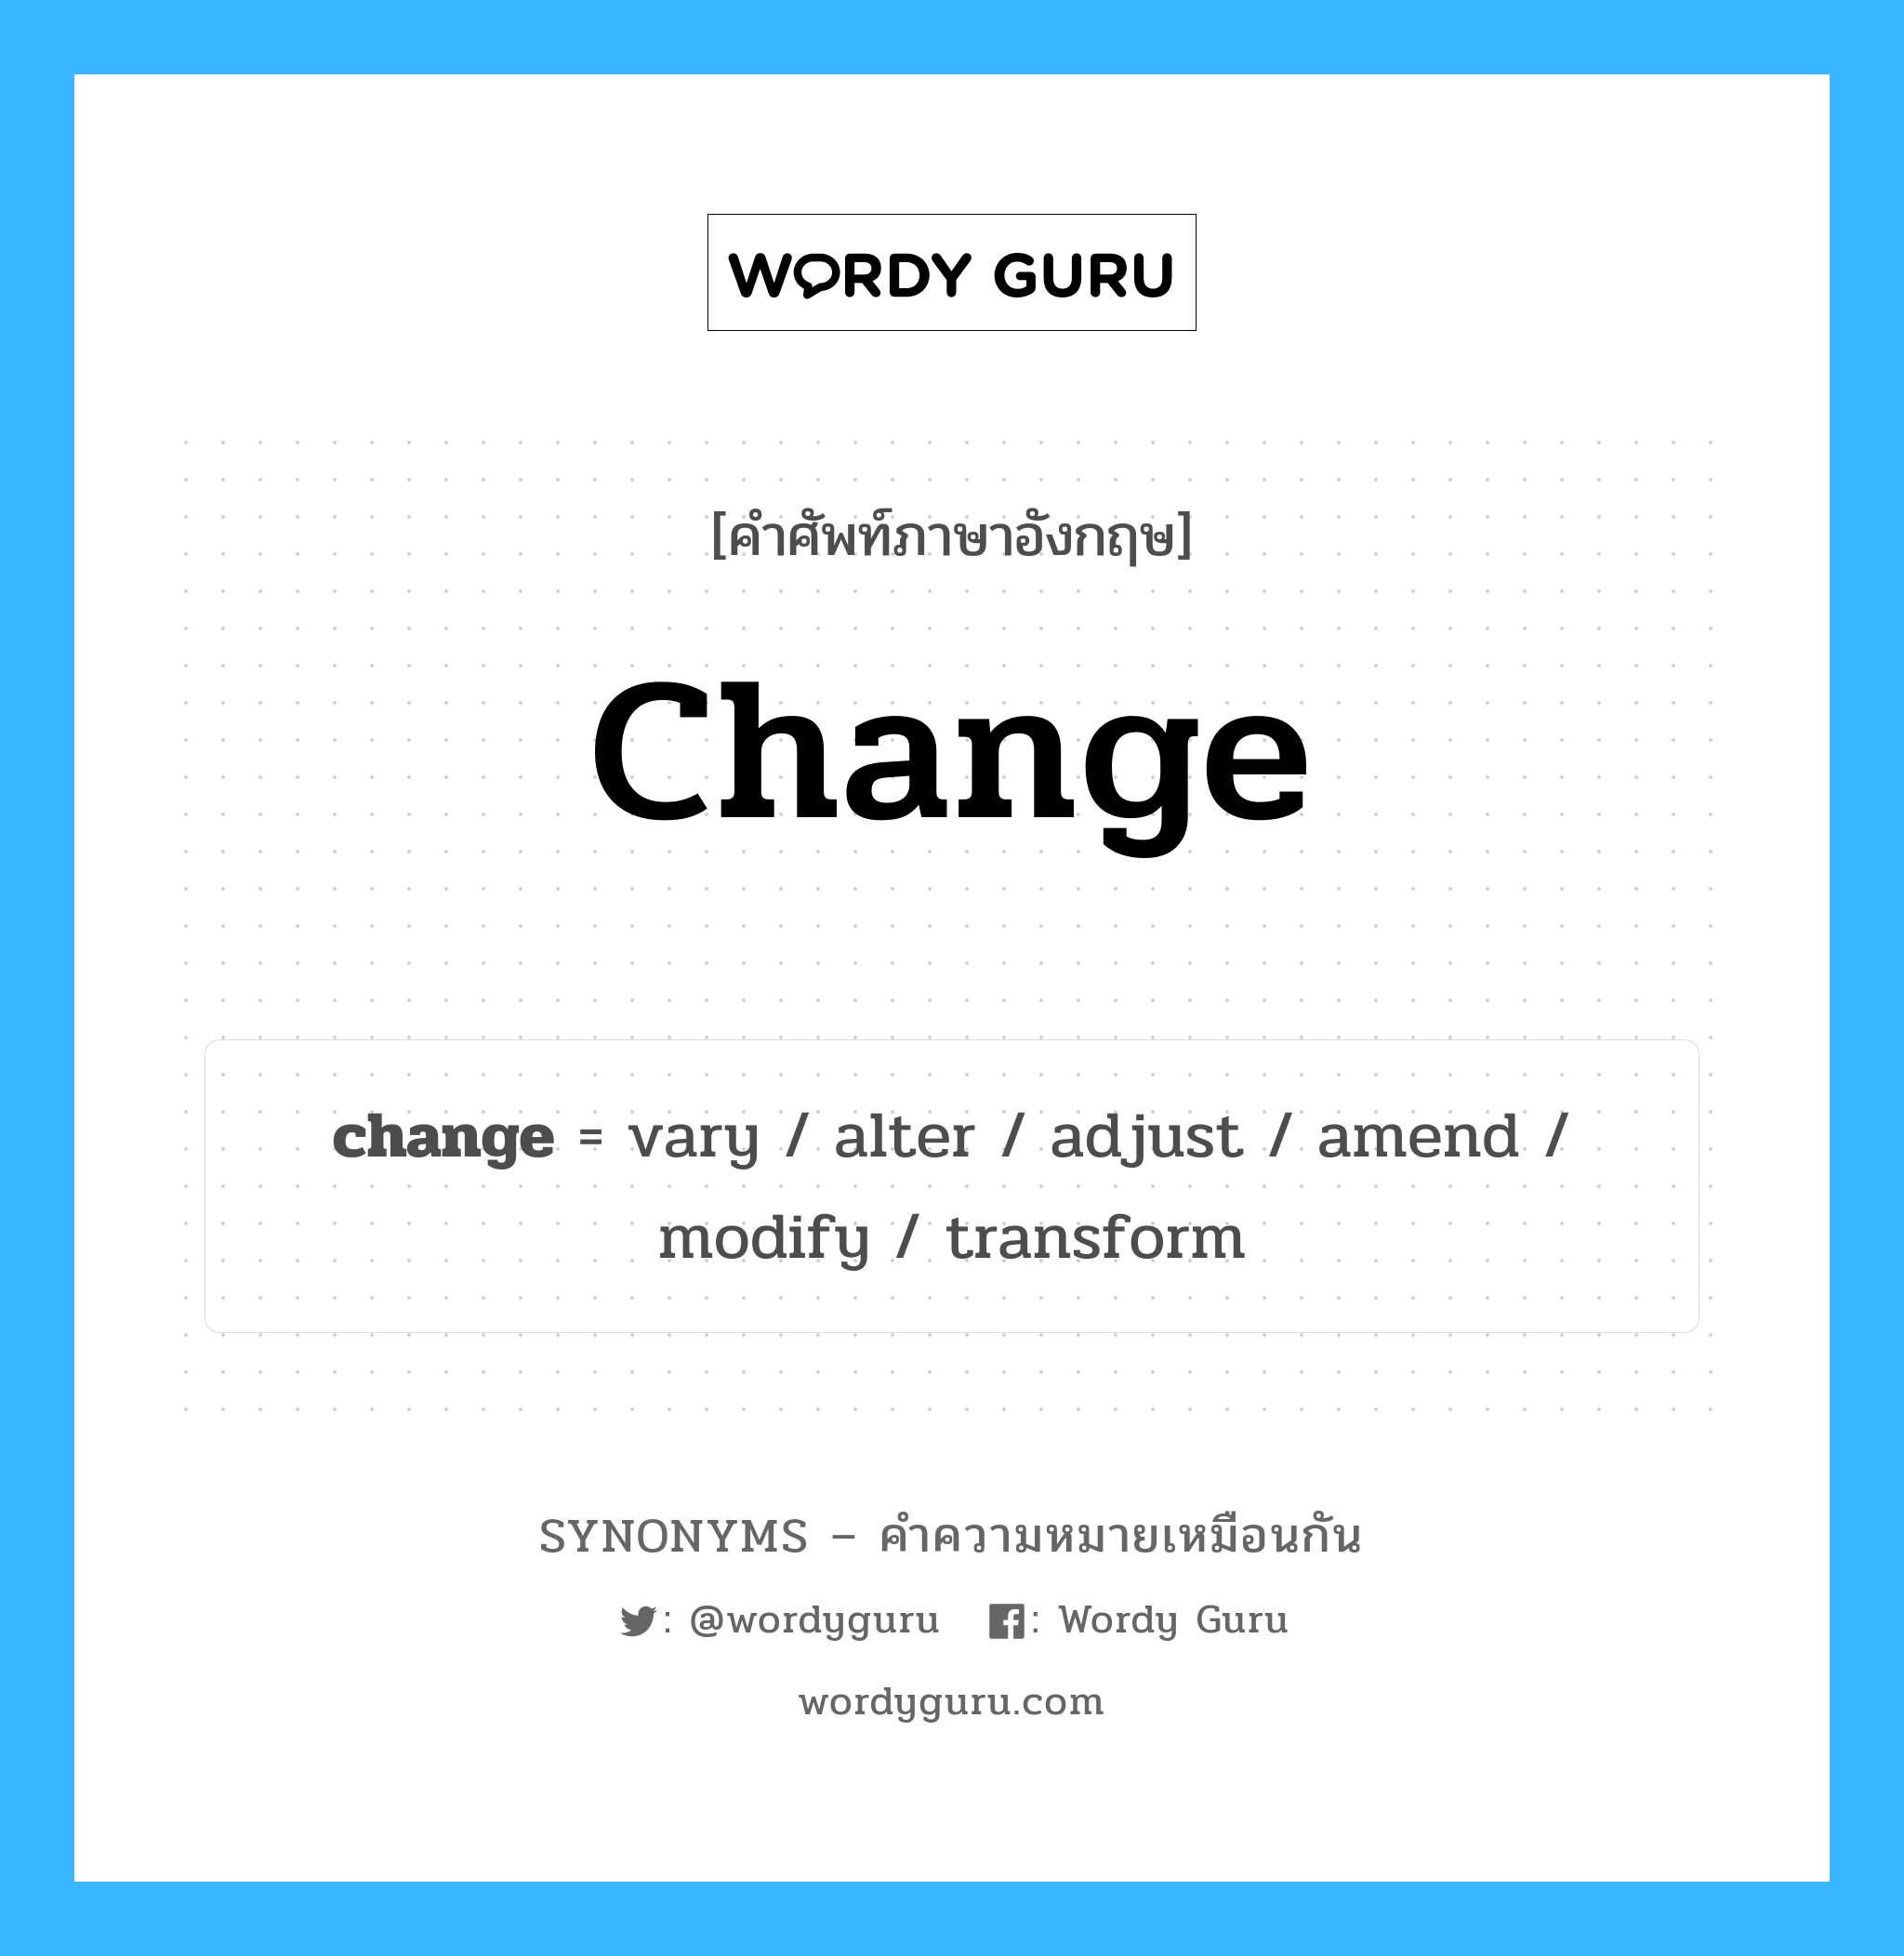 amend เป็นหนึ่งใน change และมีคำอื่น ๆ อีกดังนี้, คำศัพท์ภาษาอังกฤษ amend ความหมายคล้ายกันกับ change แปลว่า แก้ไข หมวด change